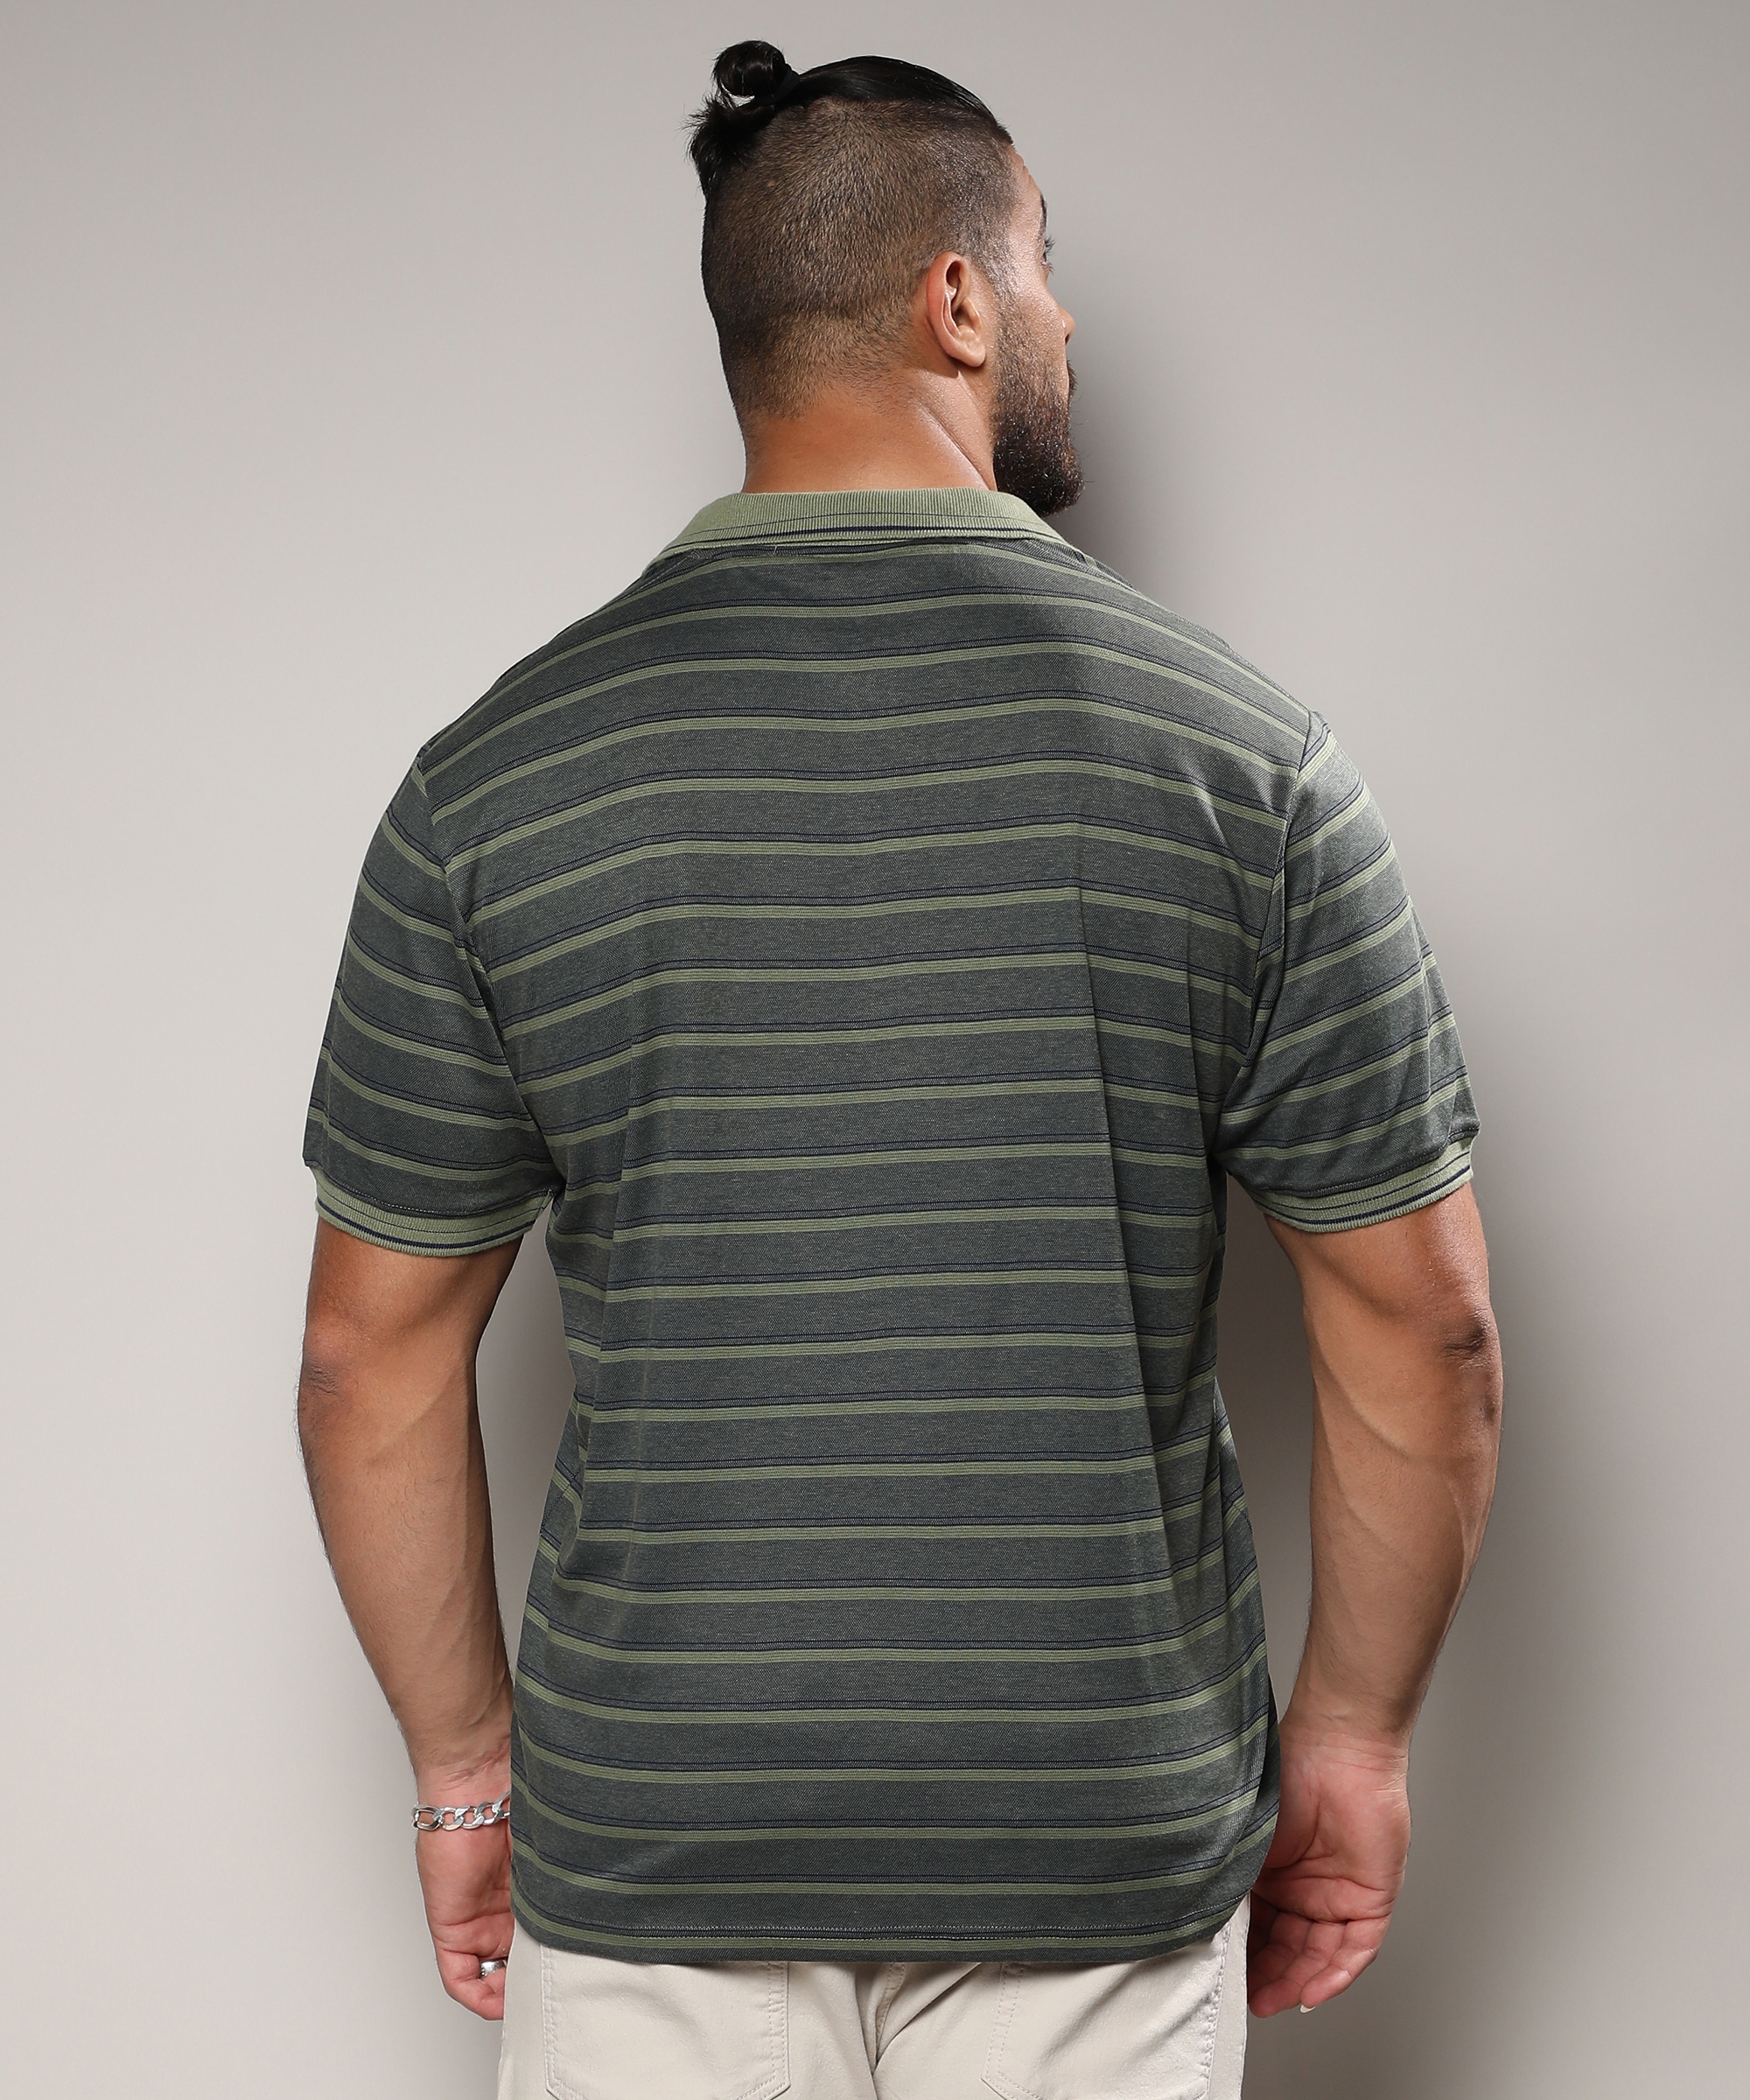 Instafab Plus | Men's Charcoal Black Shadow Striped T-Shirt